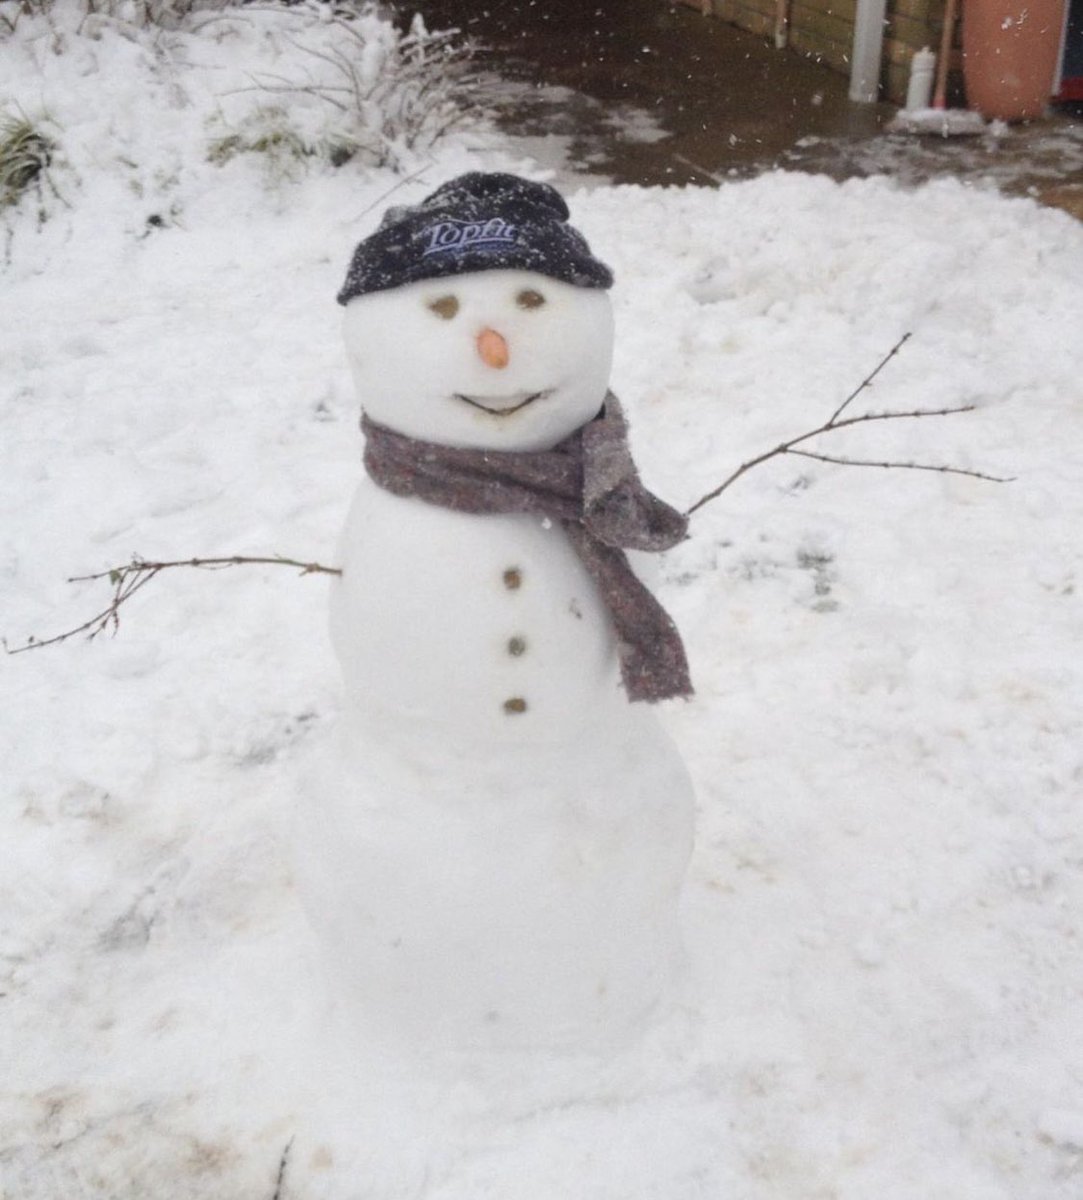 Happy snow day from Terry the Topfit snowman ⛄️ ❄️
#snow #snowday #snowman #fun #happy #topfitkitchens #bikbbi #gmc #bristol